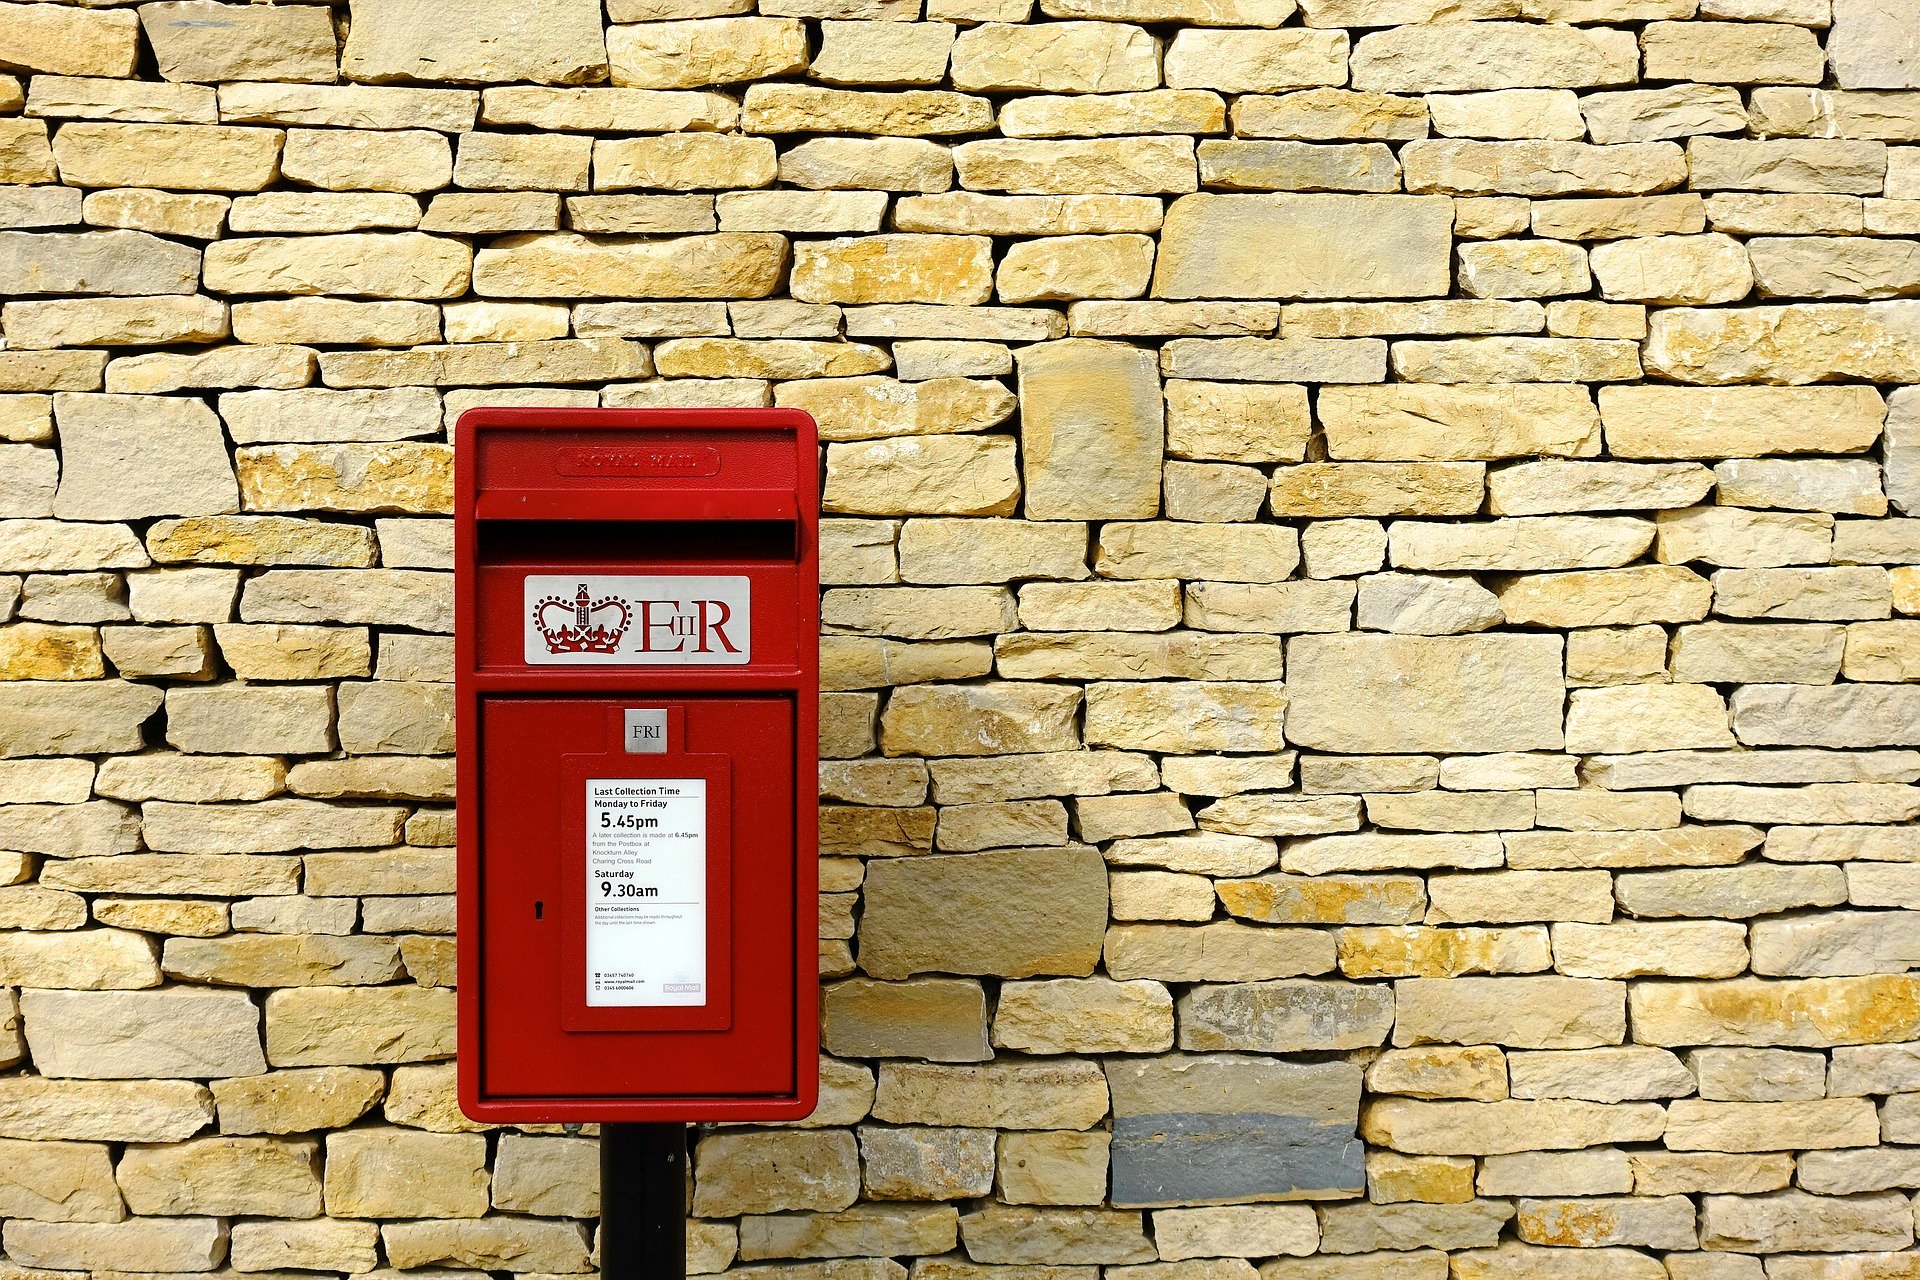 A Royal Mail post box bearing the EIIR insignia.